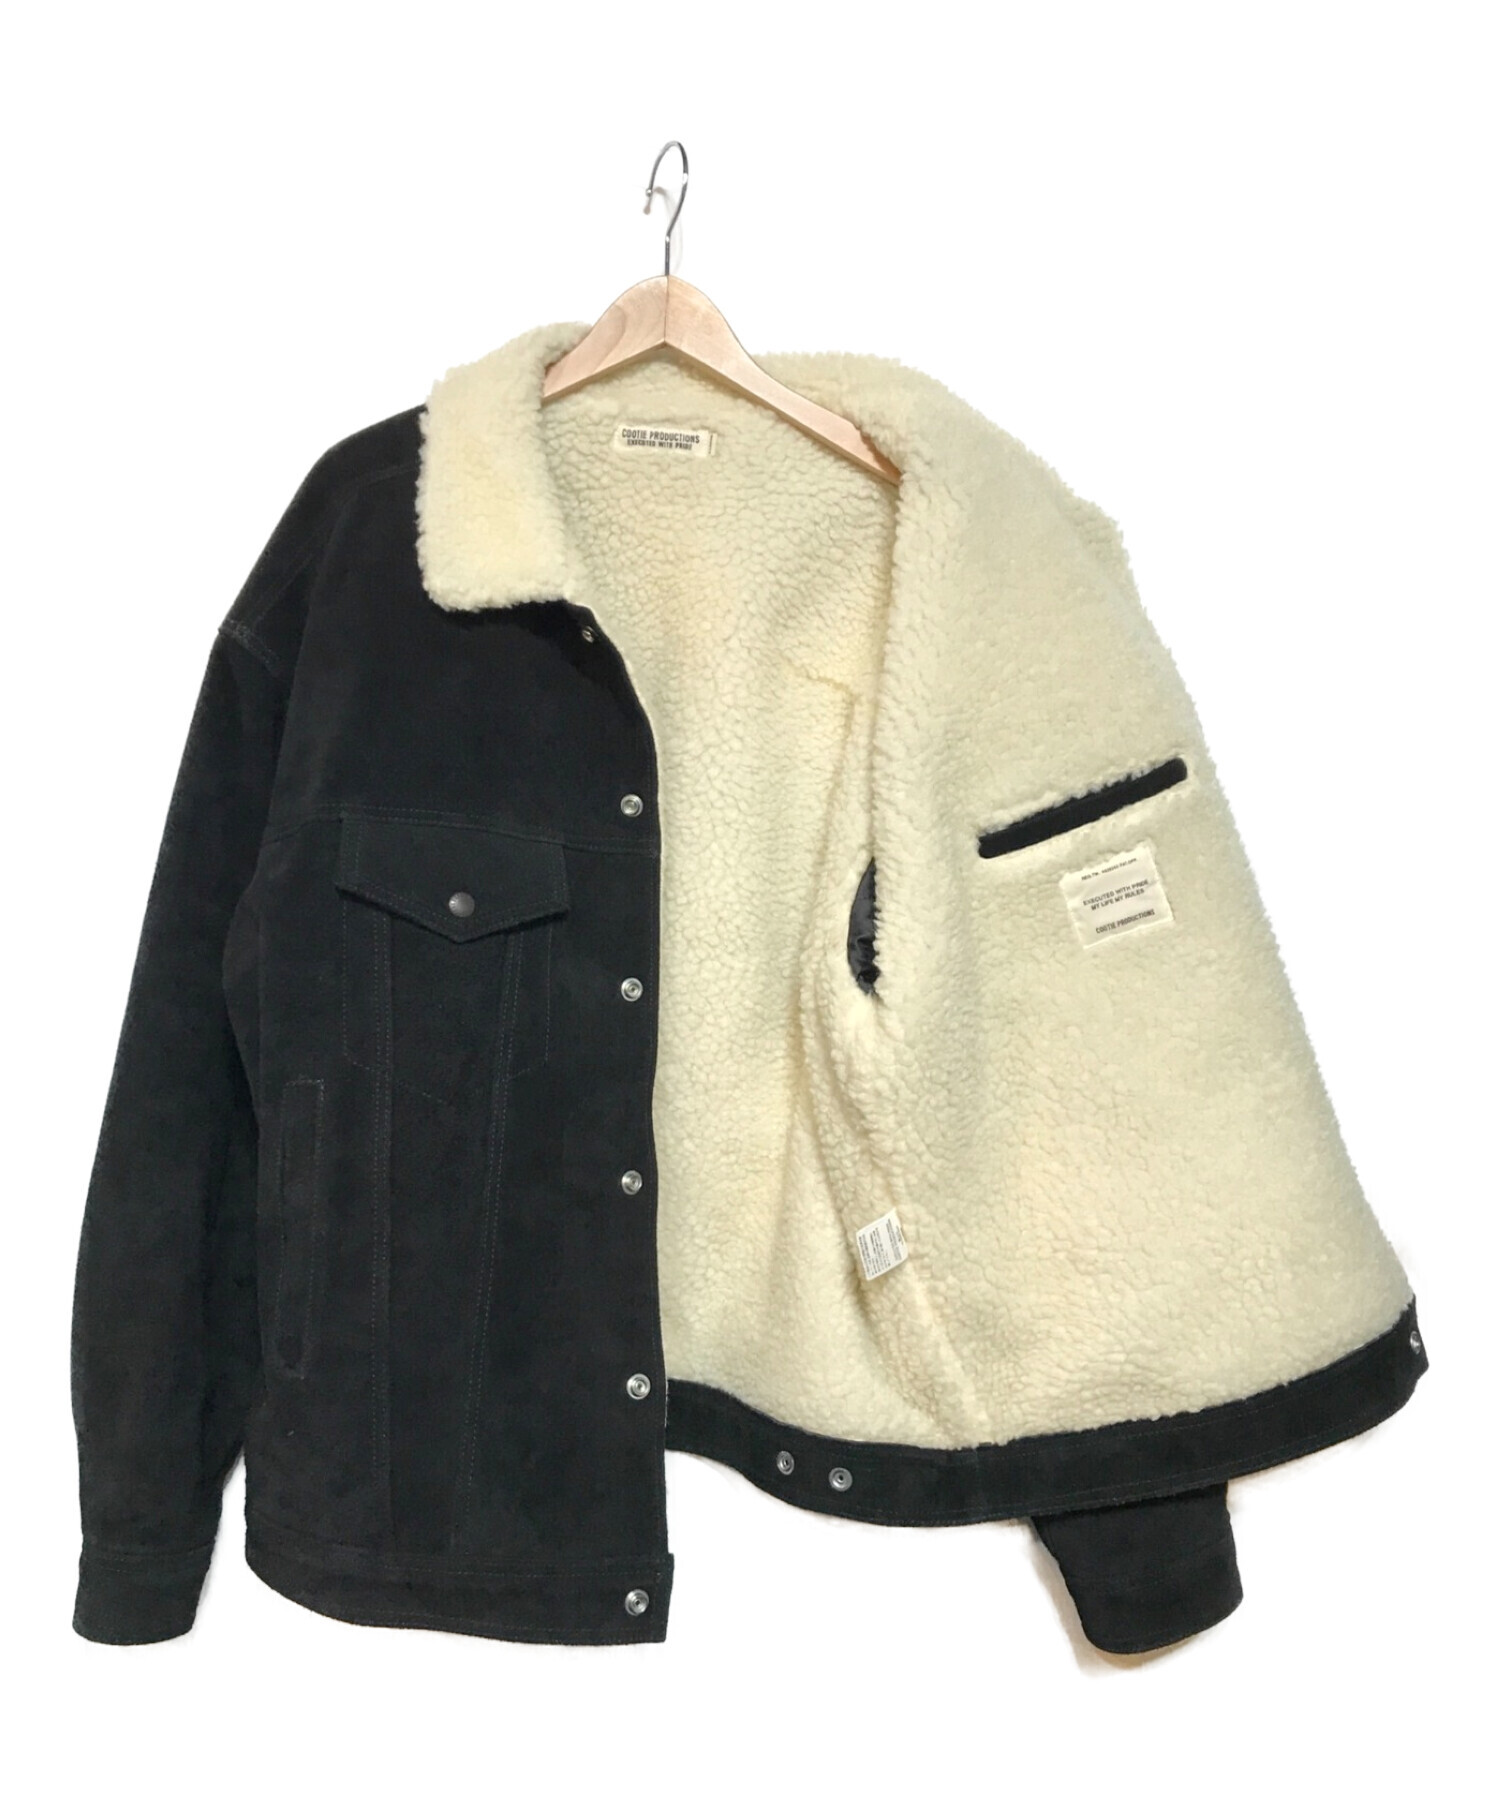 COOTIE PRODUCTIONS (クーティープロダクツ) Suede Boa Track Jacket ブラック サイズ:XL